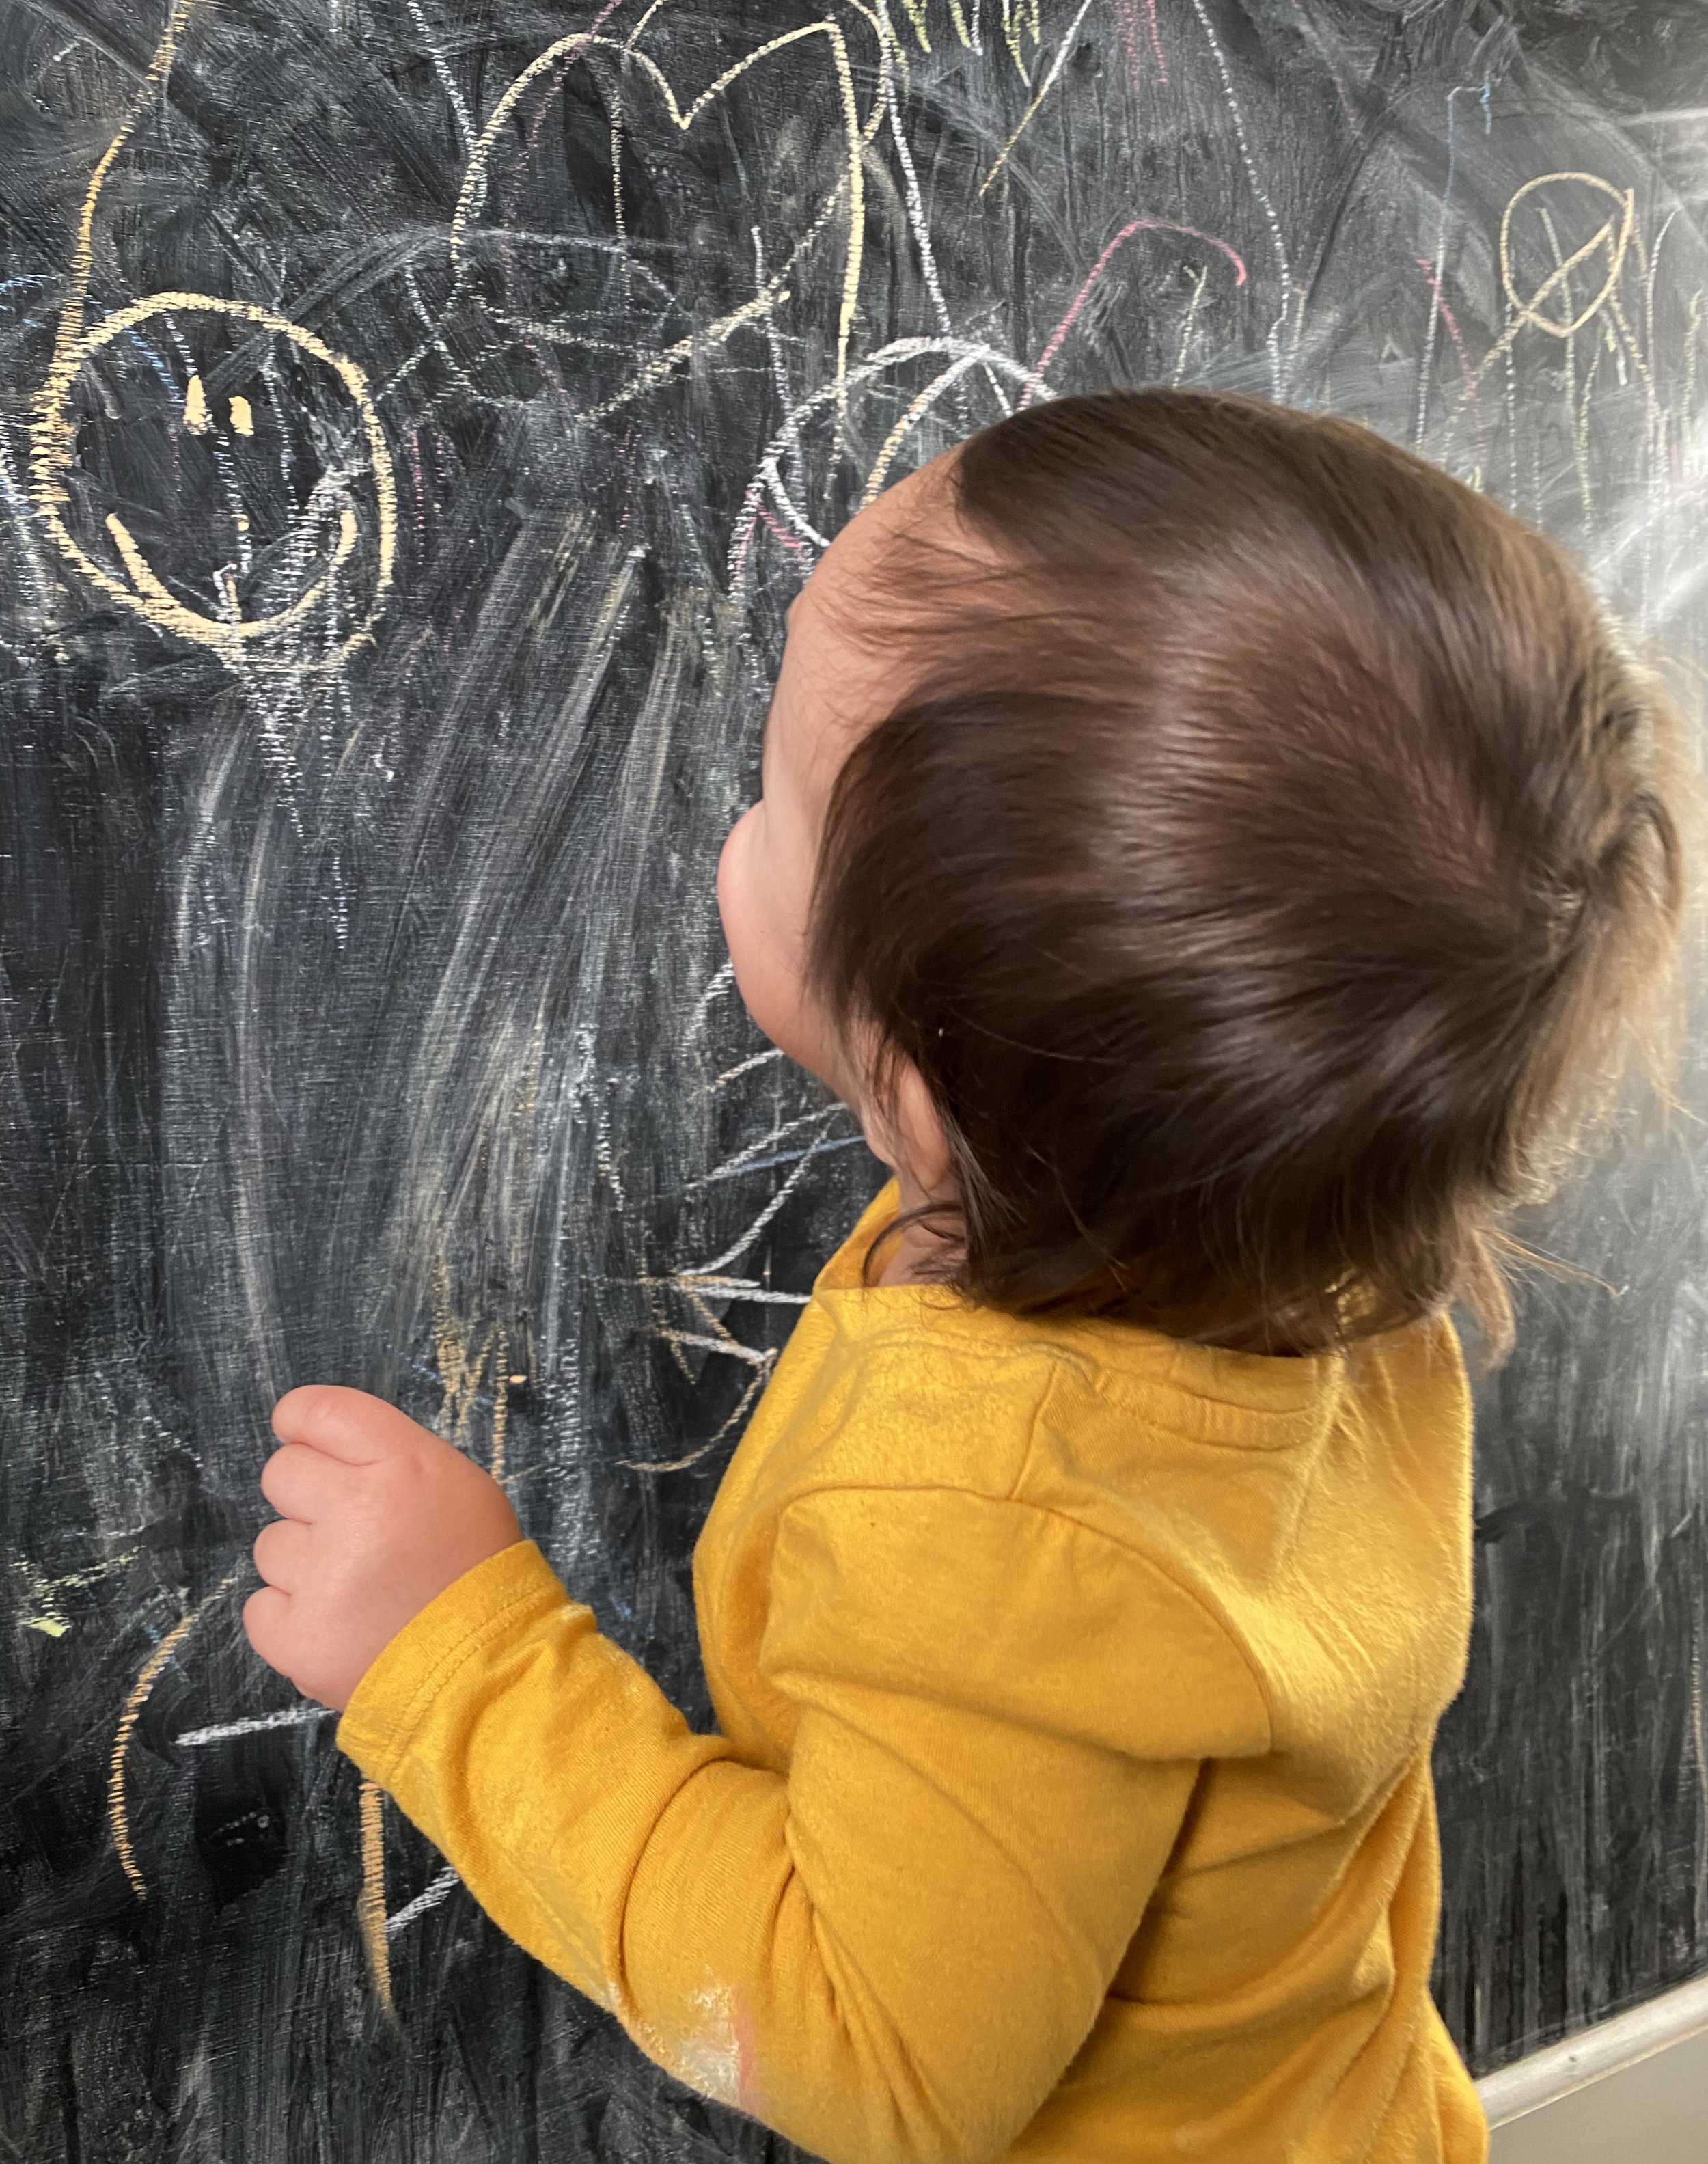 Child at Chalkboard.jpg